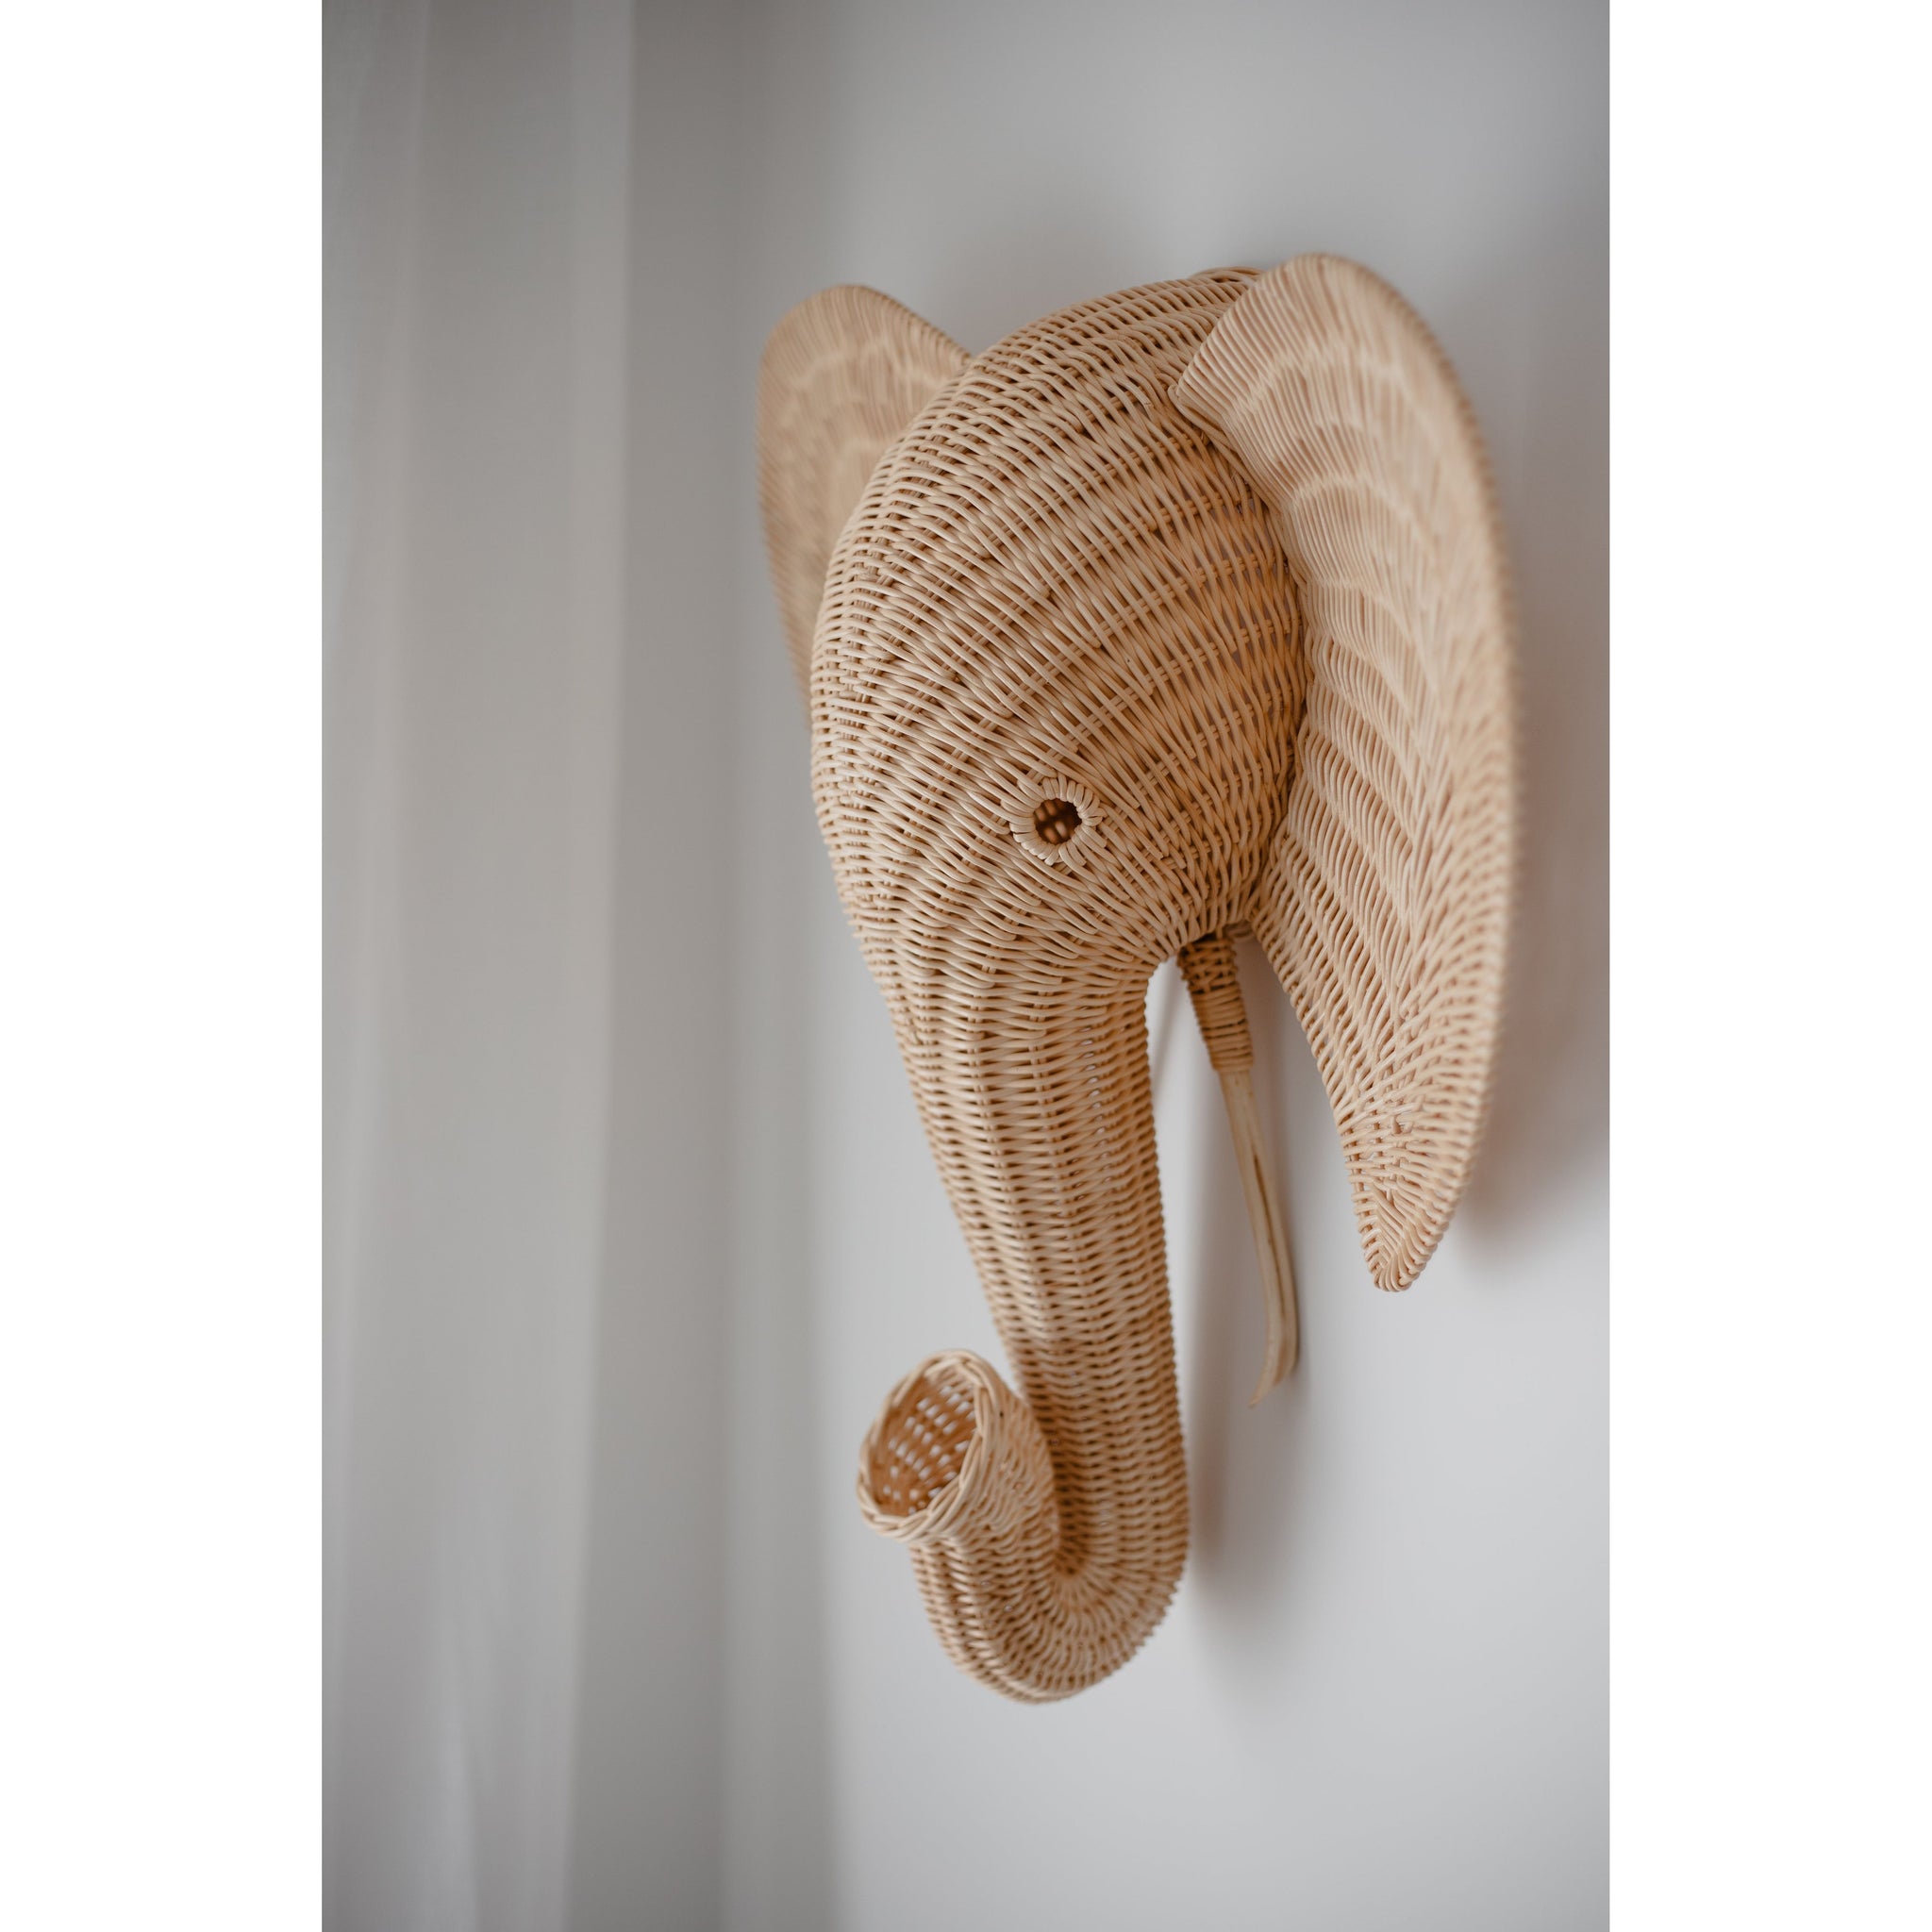 inkah rattan elephant wall hanging